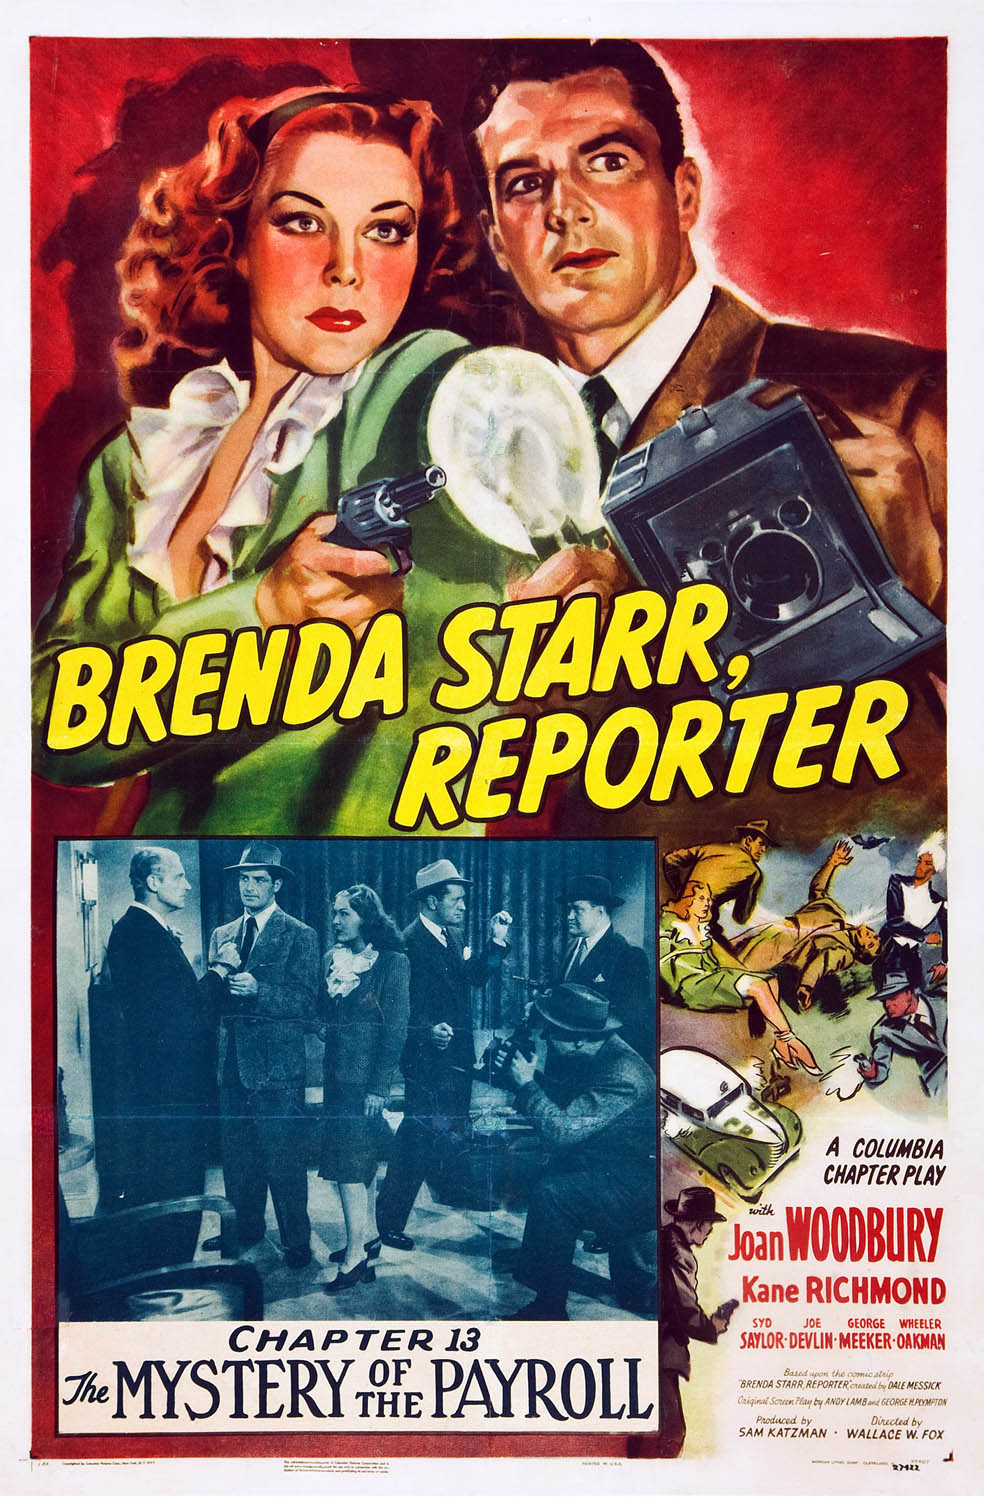 BRENDA STARR, REPORTER